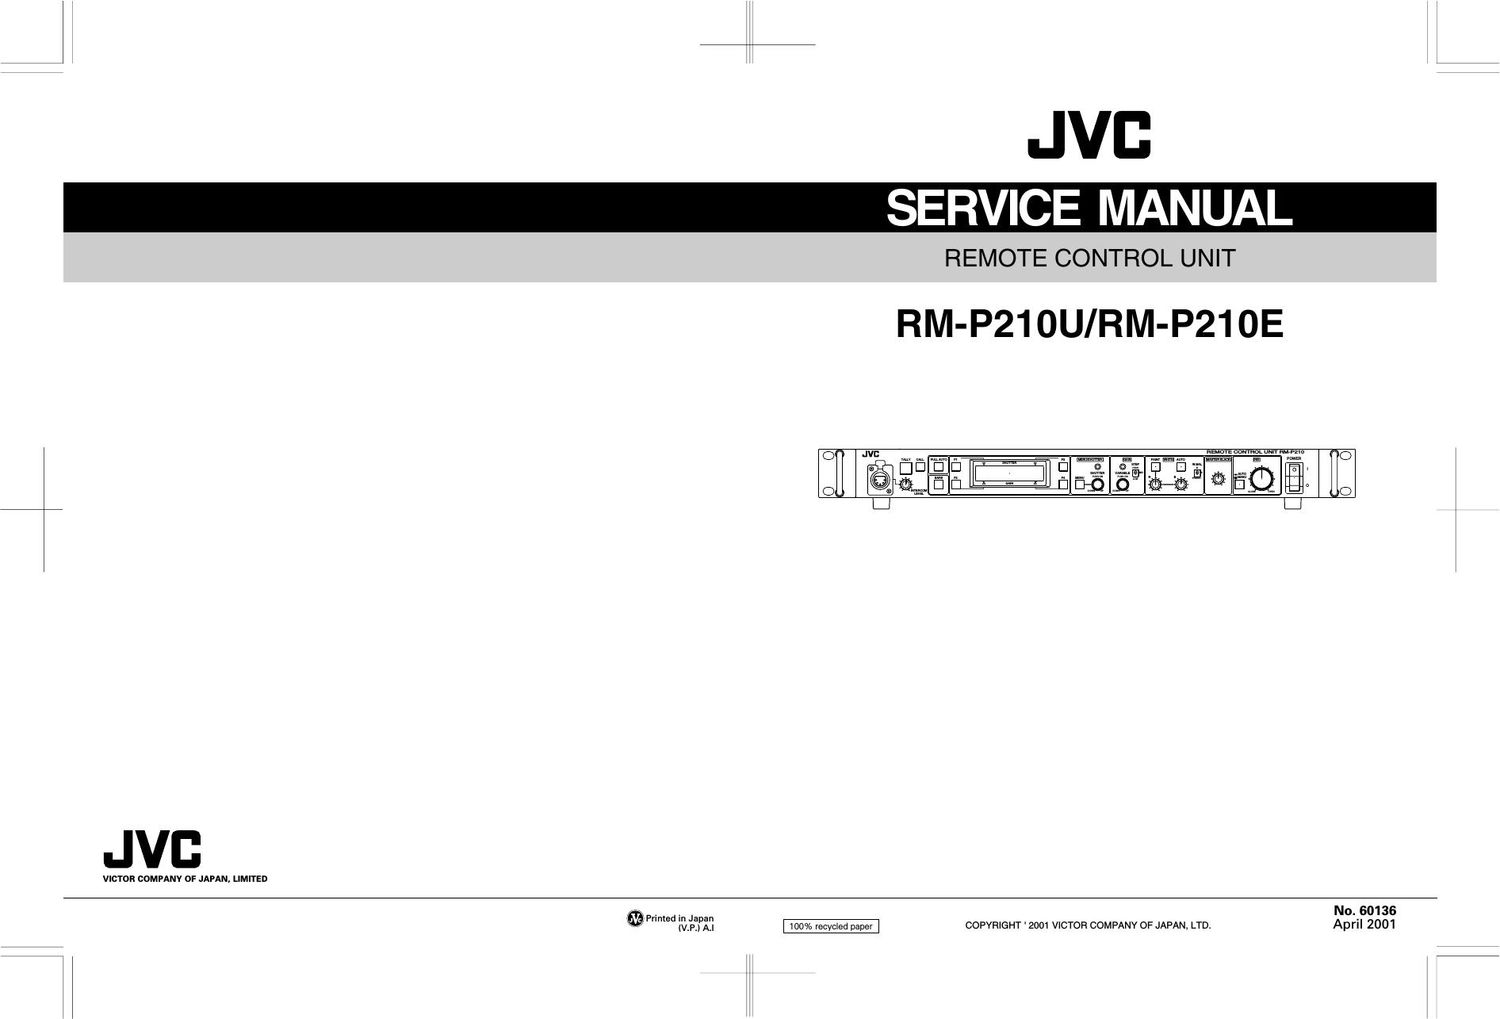 Jvc RPM 210 Service Manual